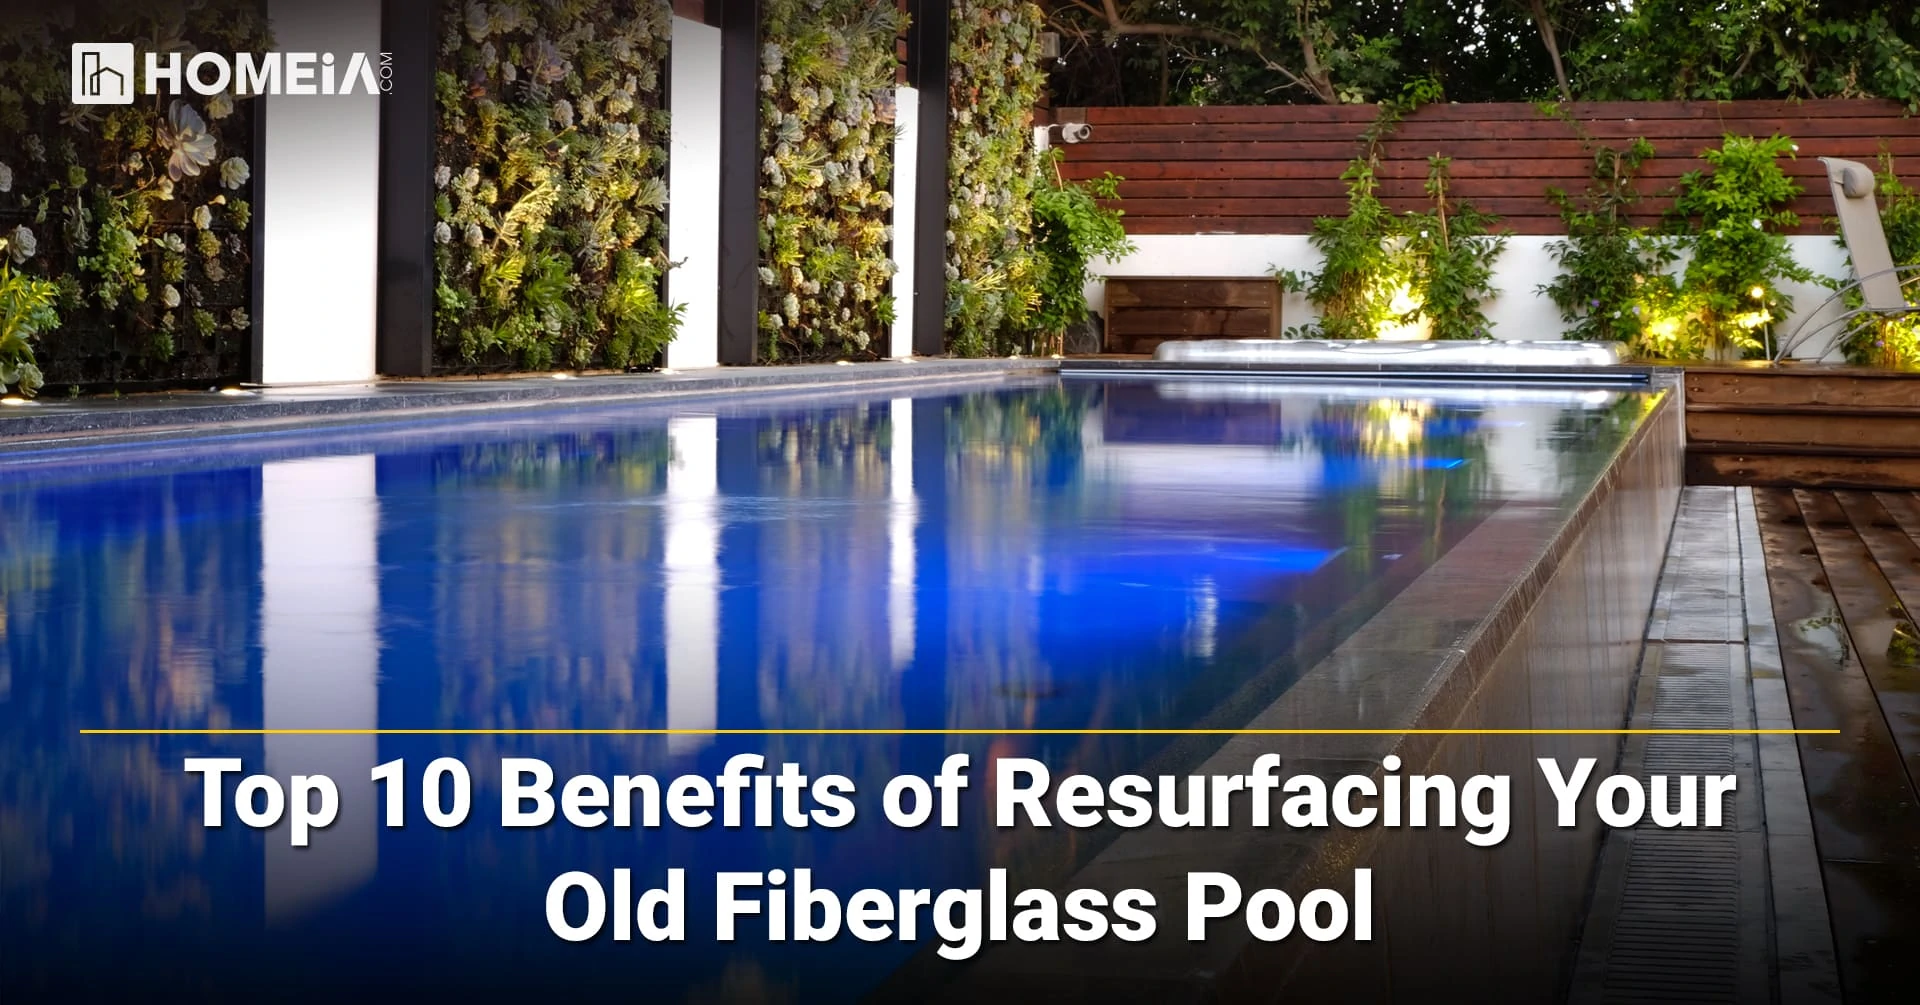 Top 10 Benefits of Resurfacing Your Old Fiberglass Pool